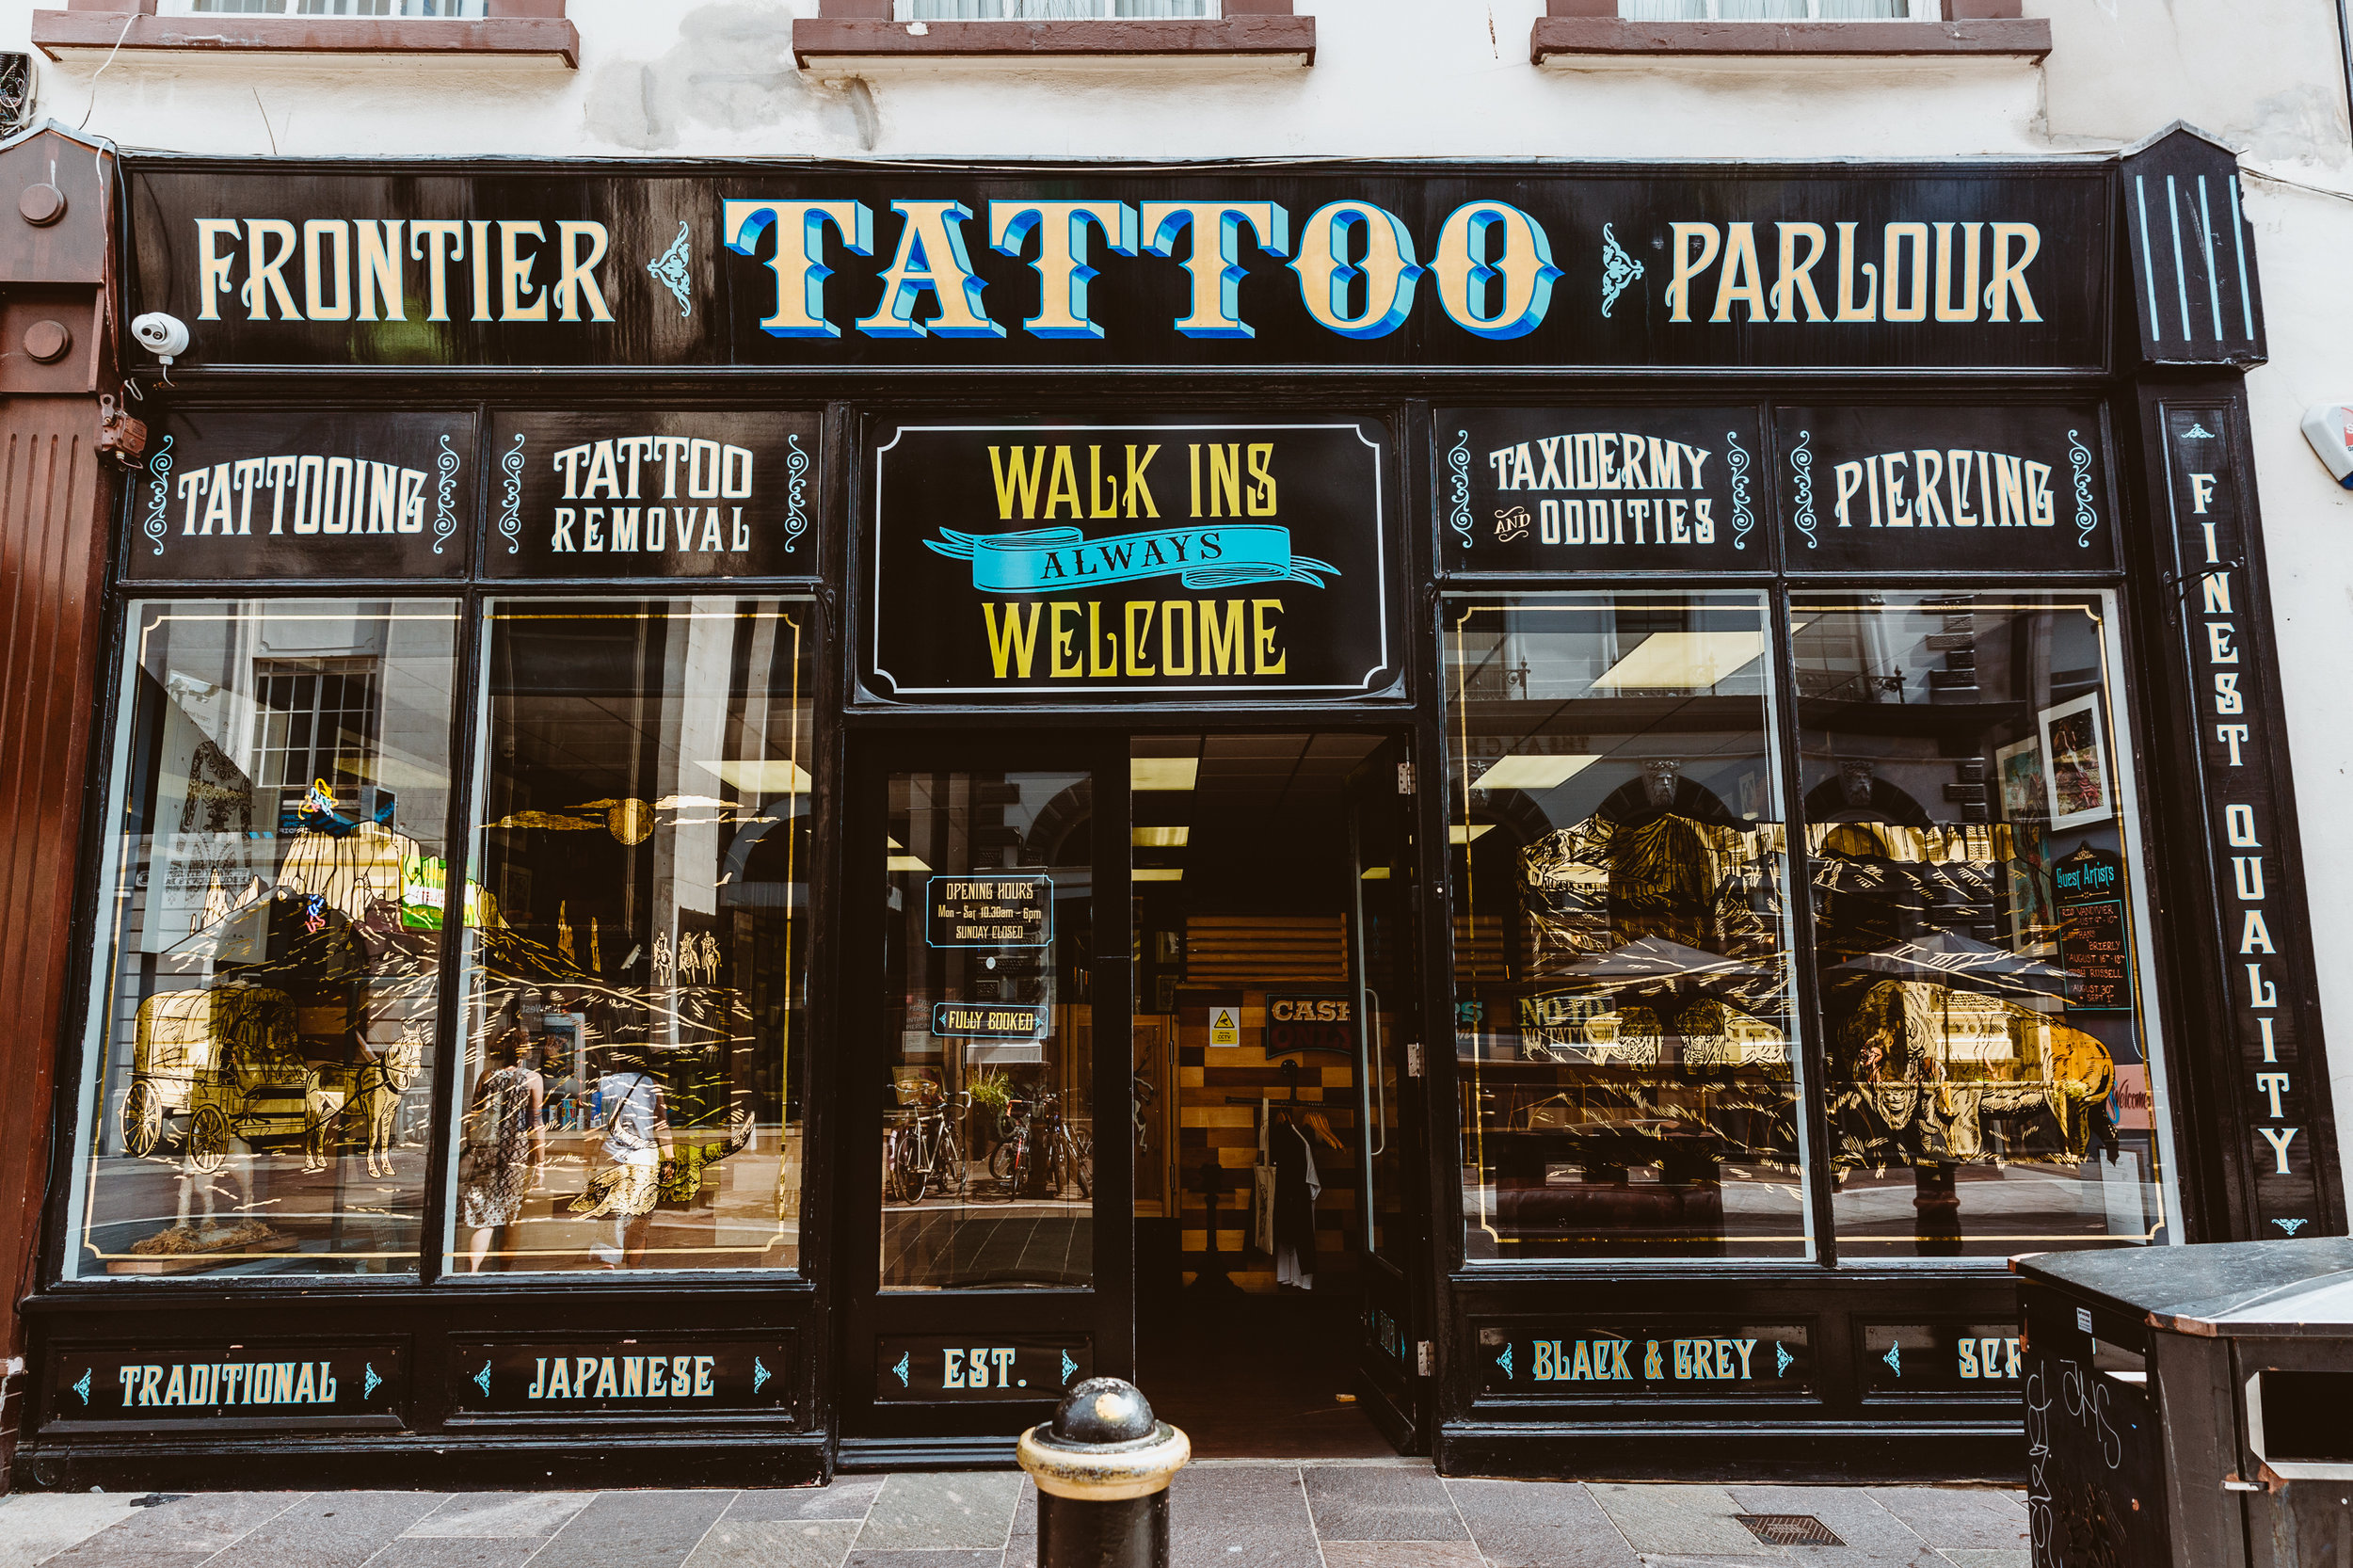 Zico tattoo studioMitchells PlainCape Town